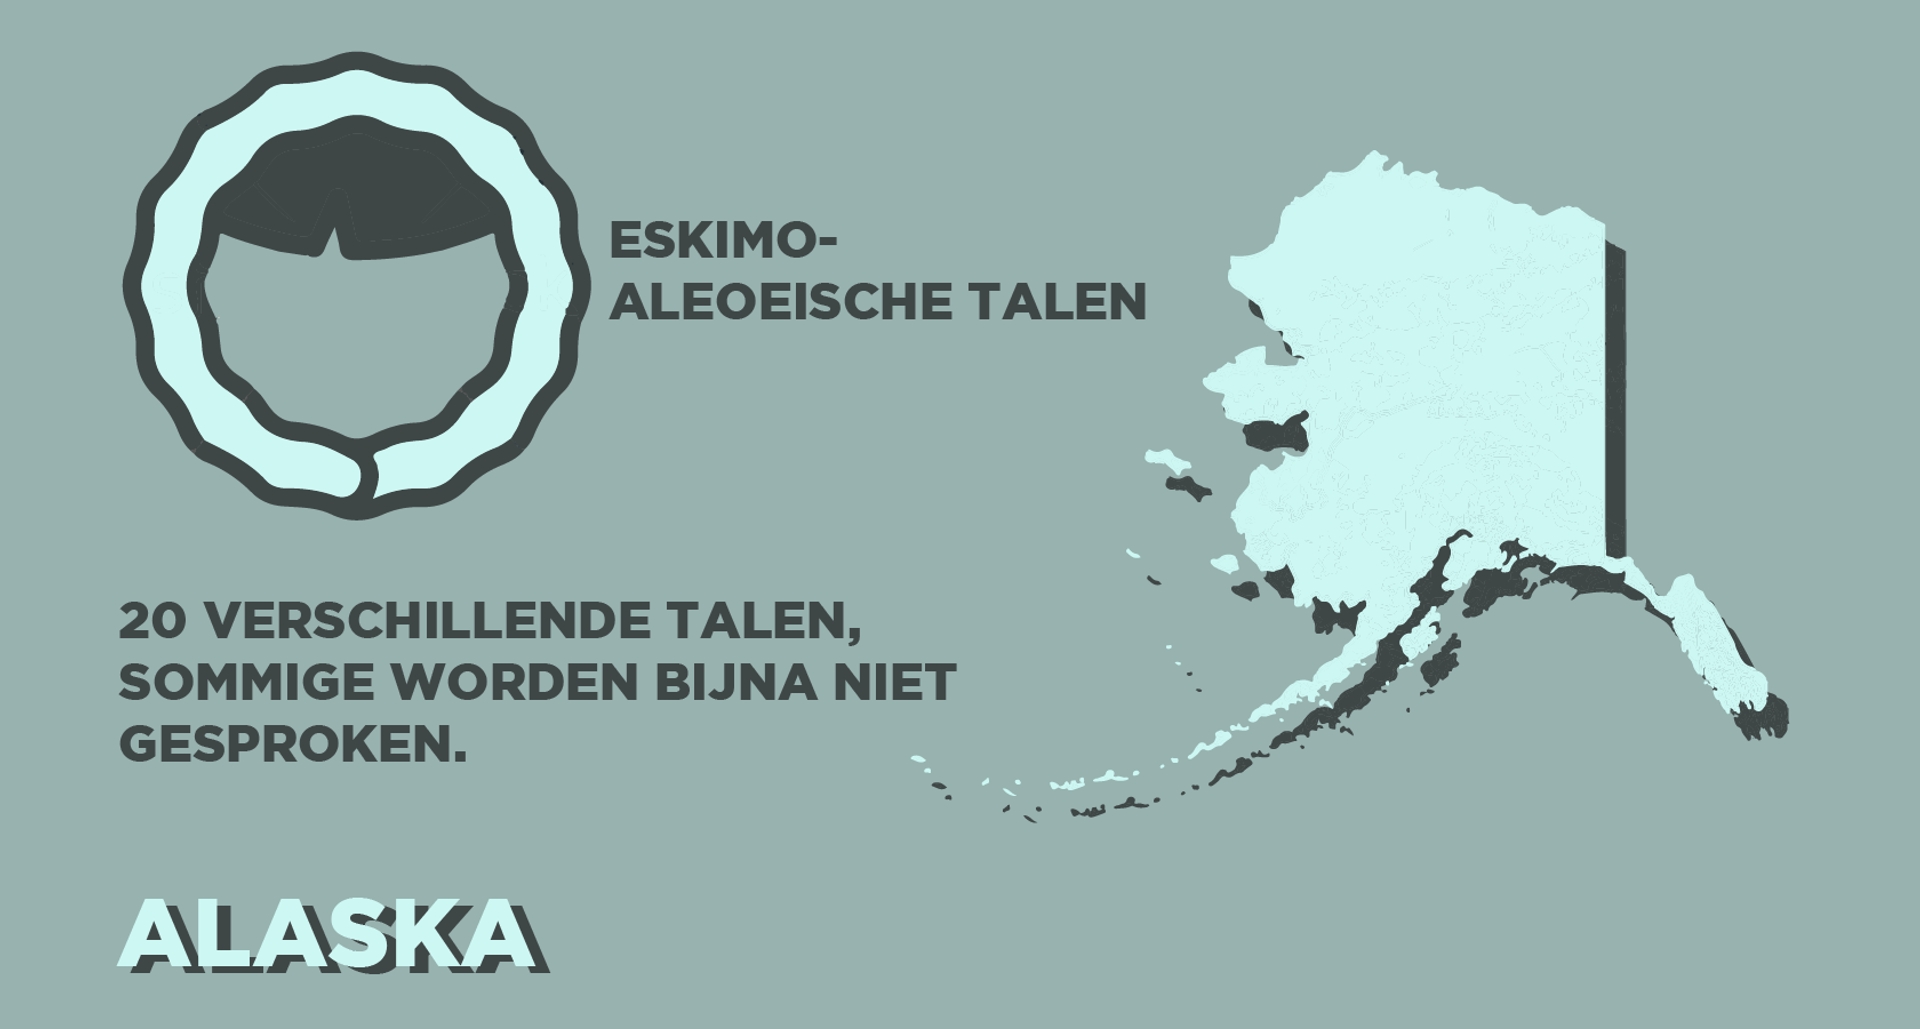 Alaska Floortje